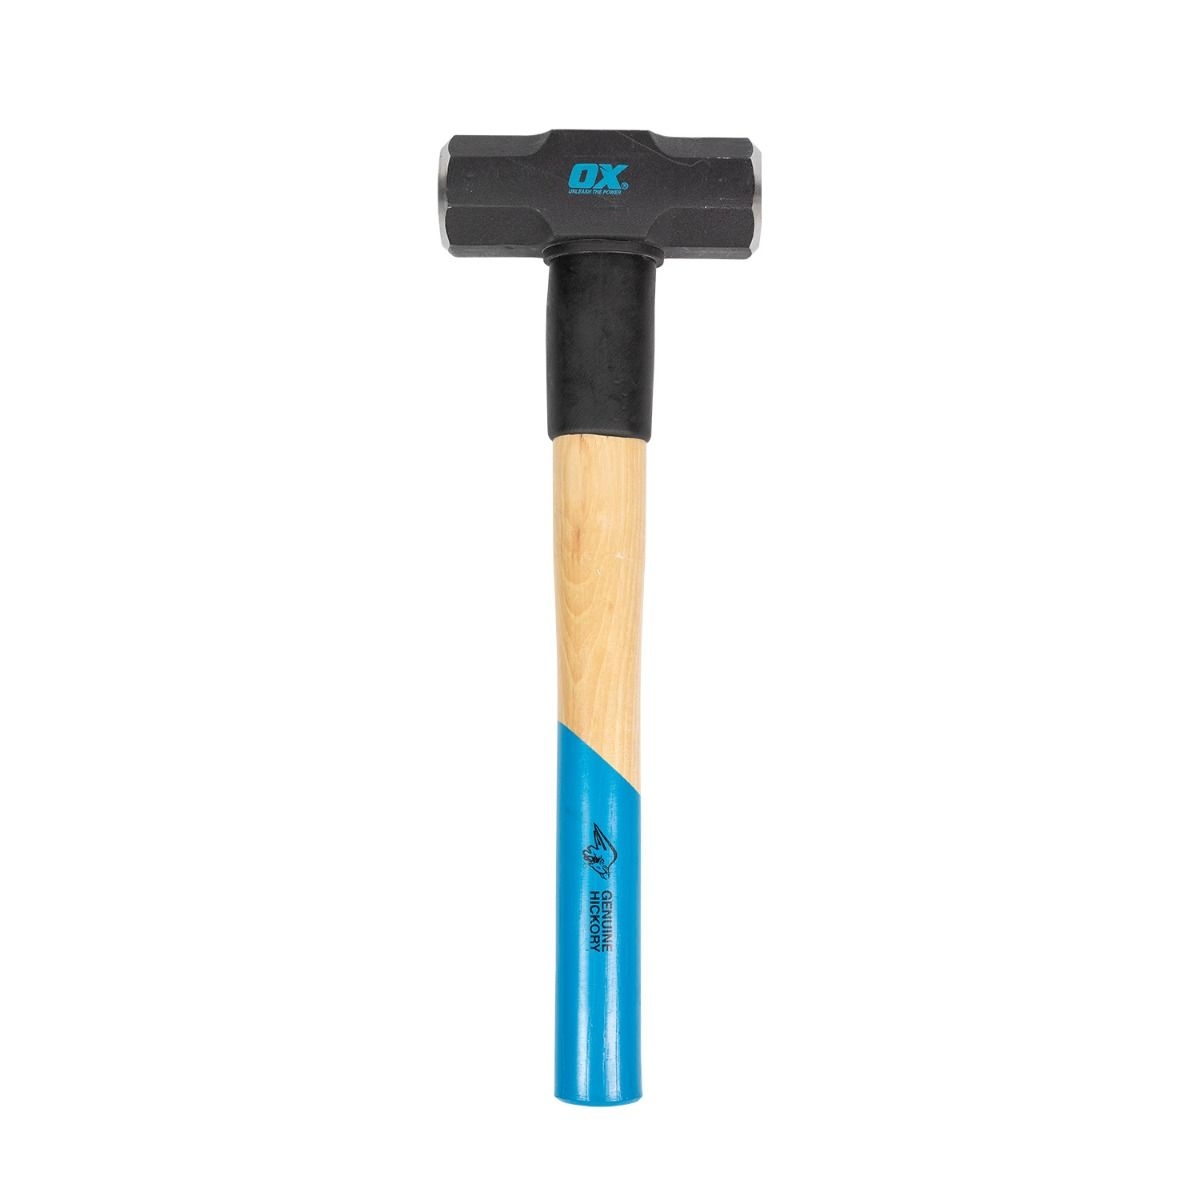 OX Pro 6lb Mini Sledge Hammer